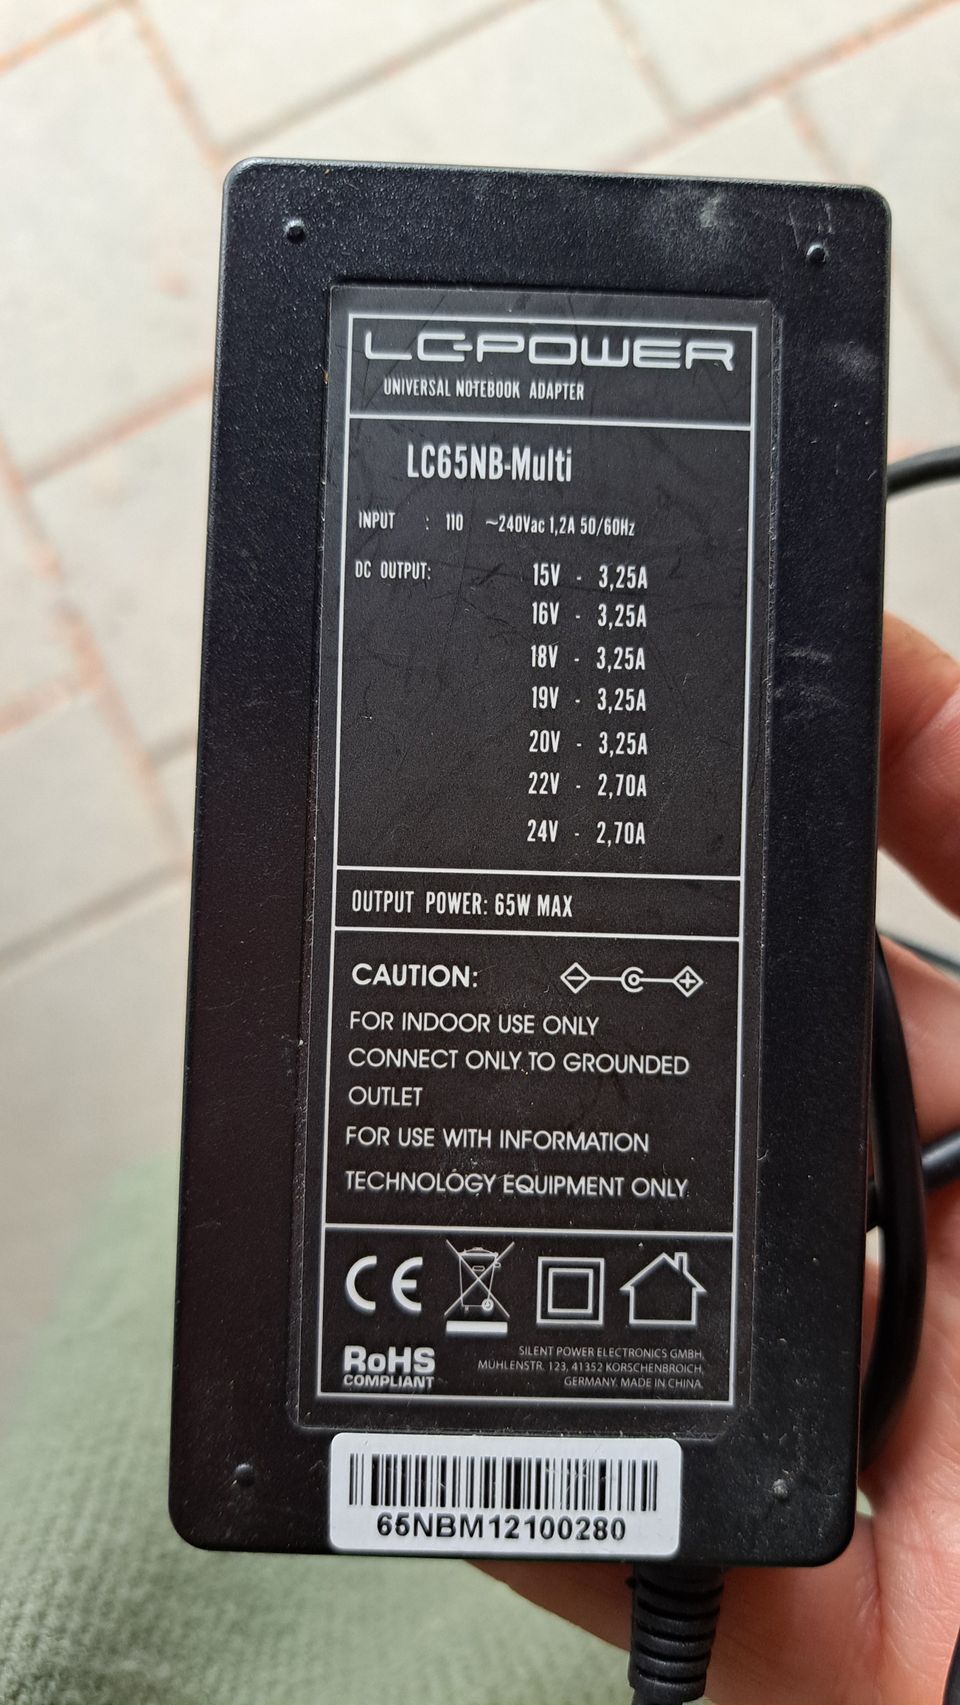 LC-power universal notebook adapter